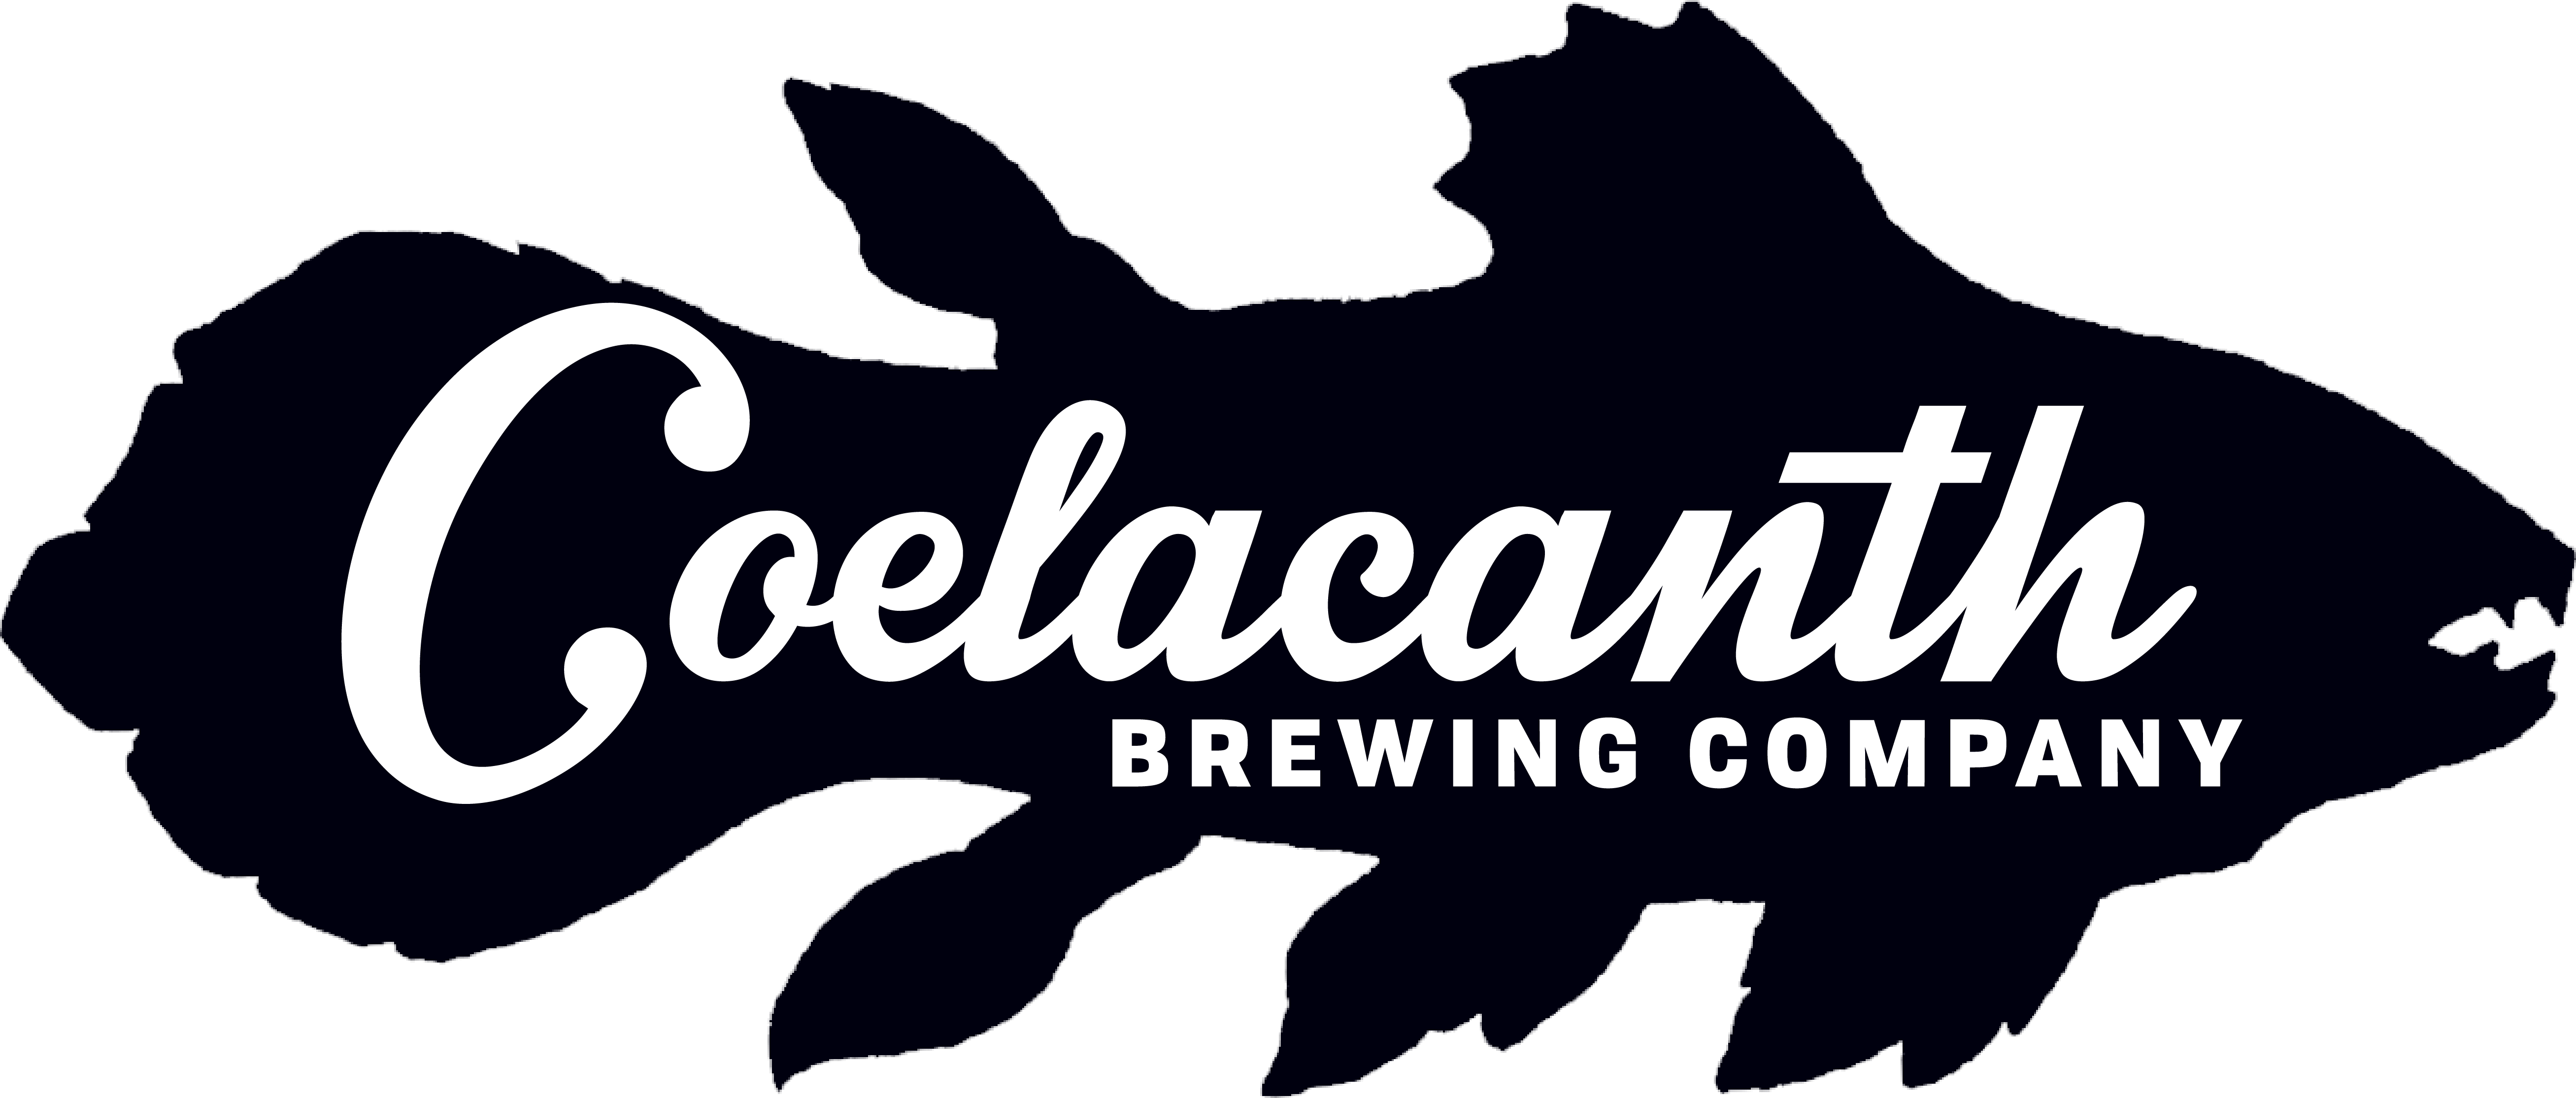 Coelacanth brewing logo